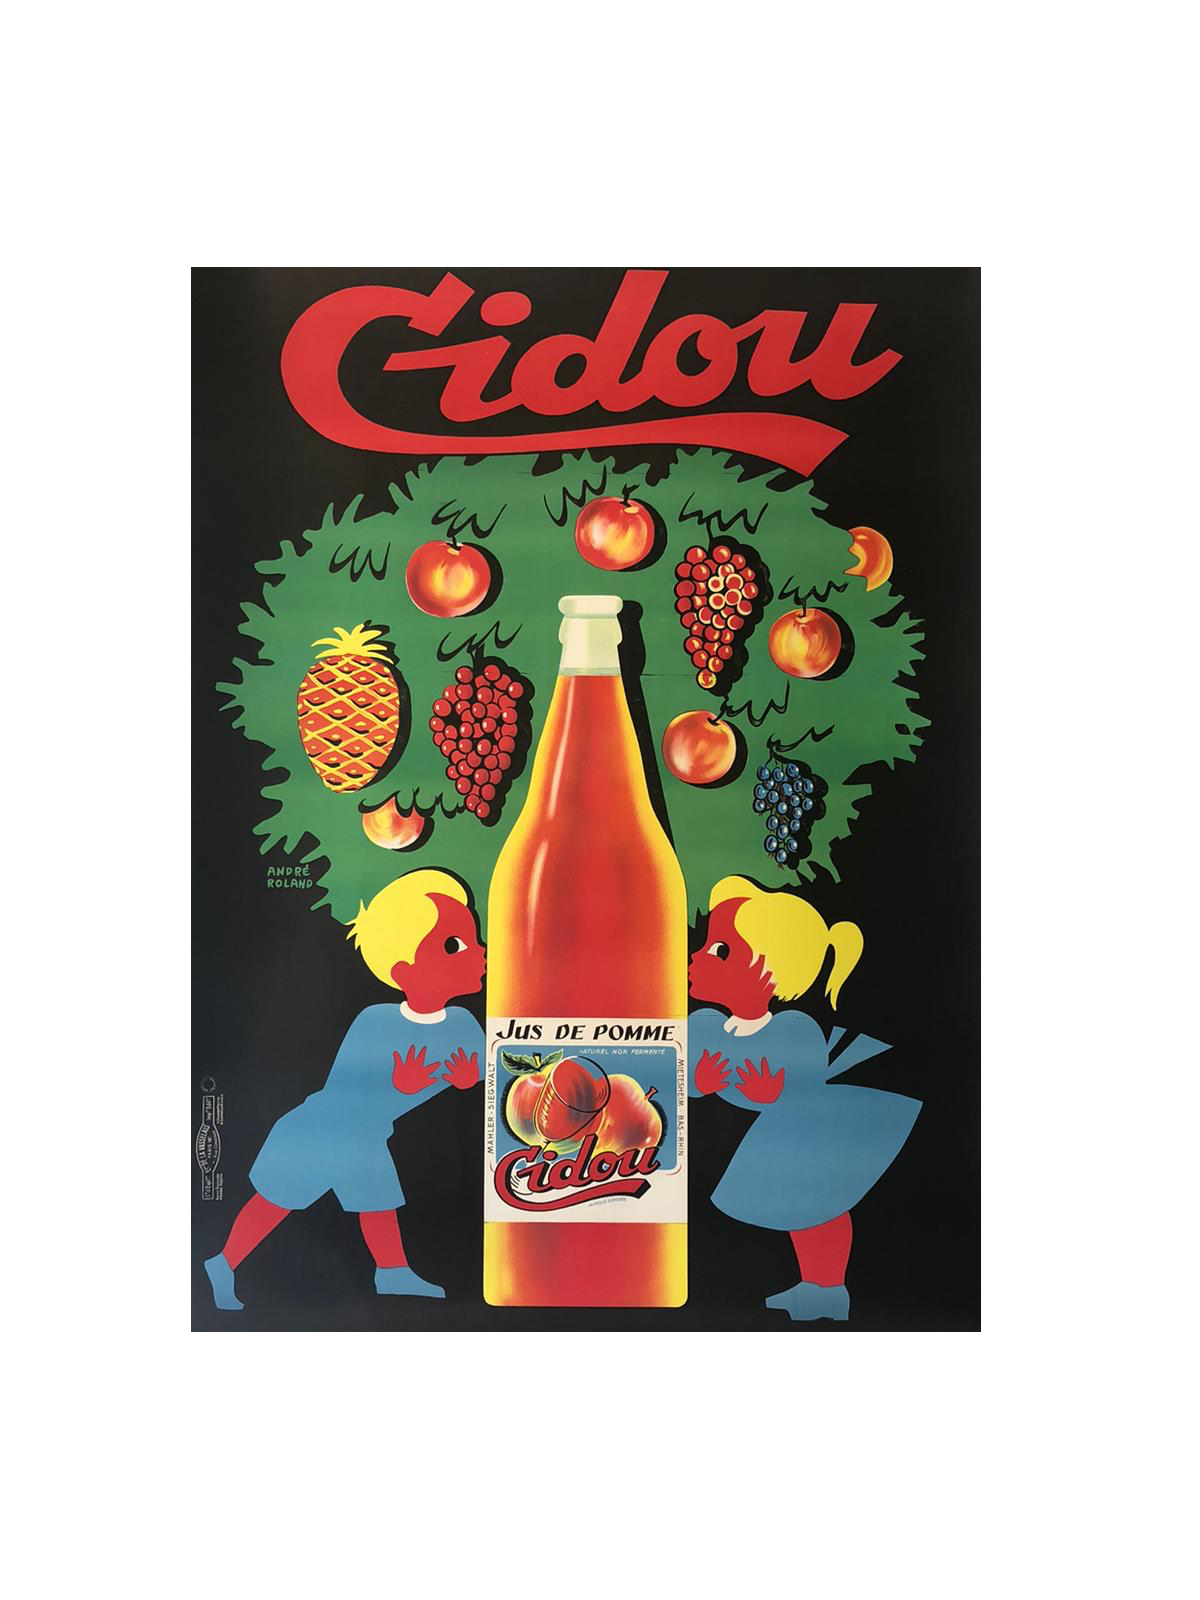 'Cidou' Apple Cider